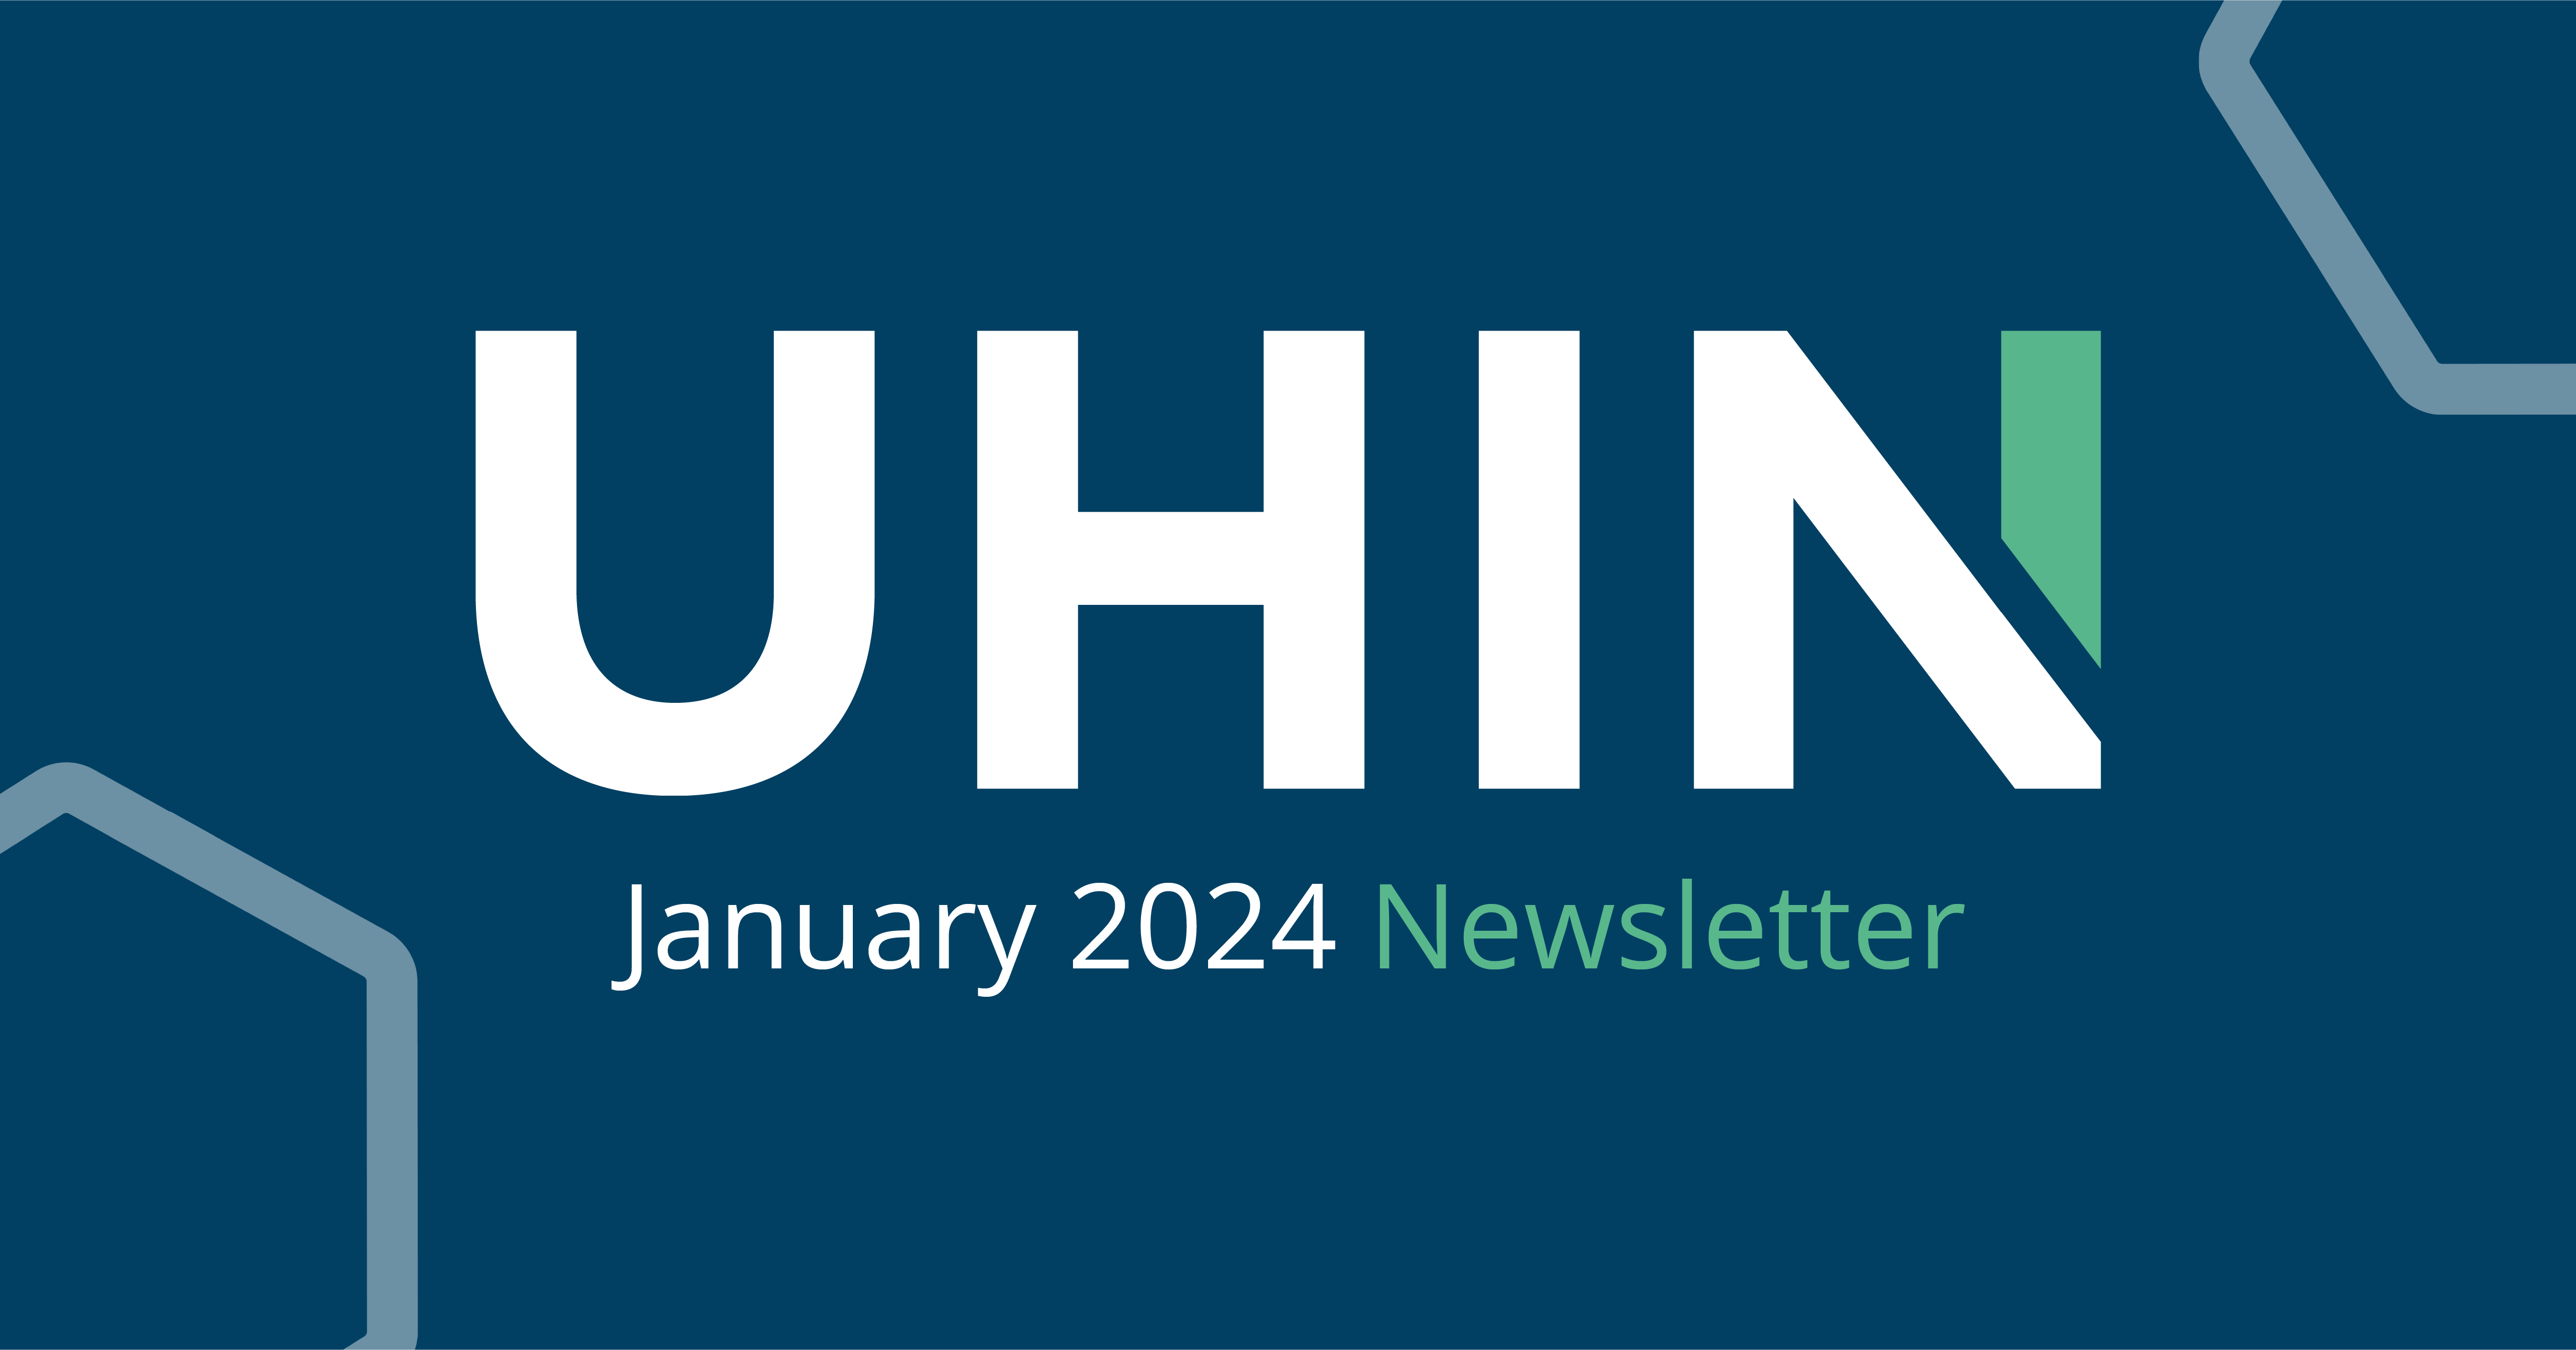 Newsletter: January 2024 Issue